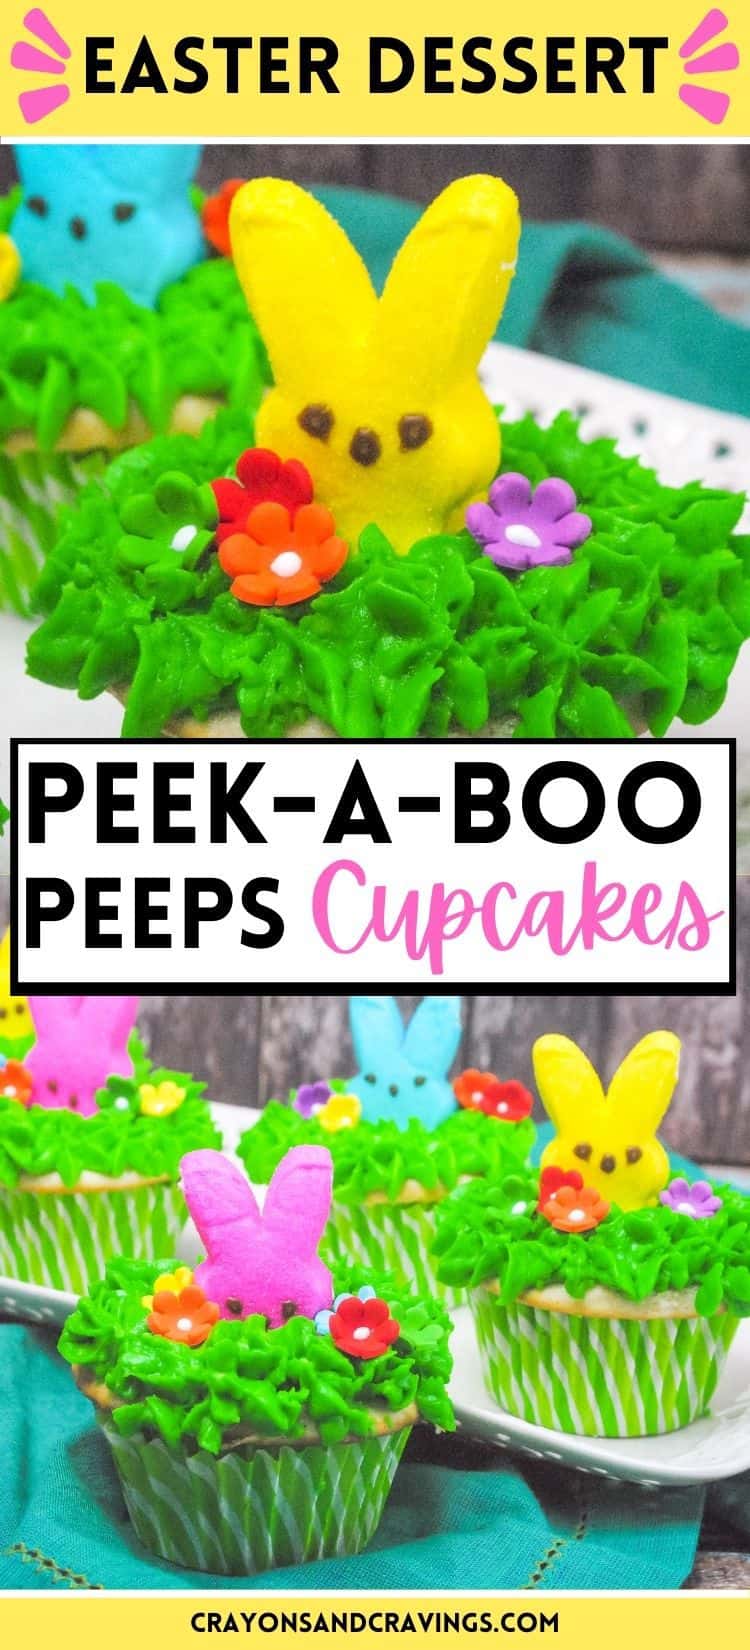 Peek-a-boo Peeps Cupcakes - easter dessert.